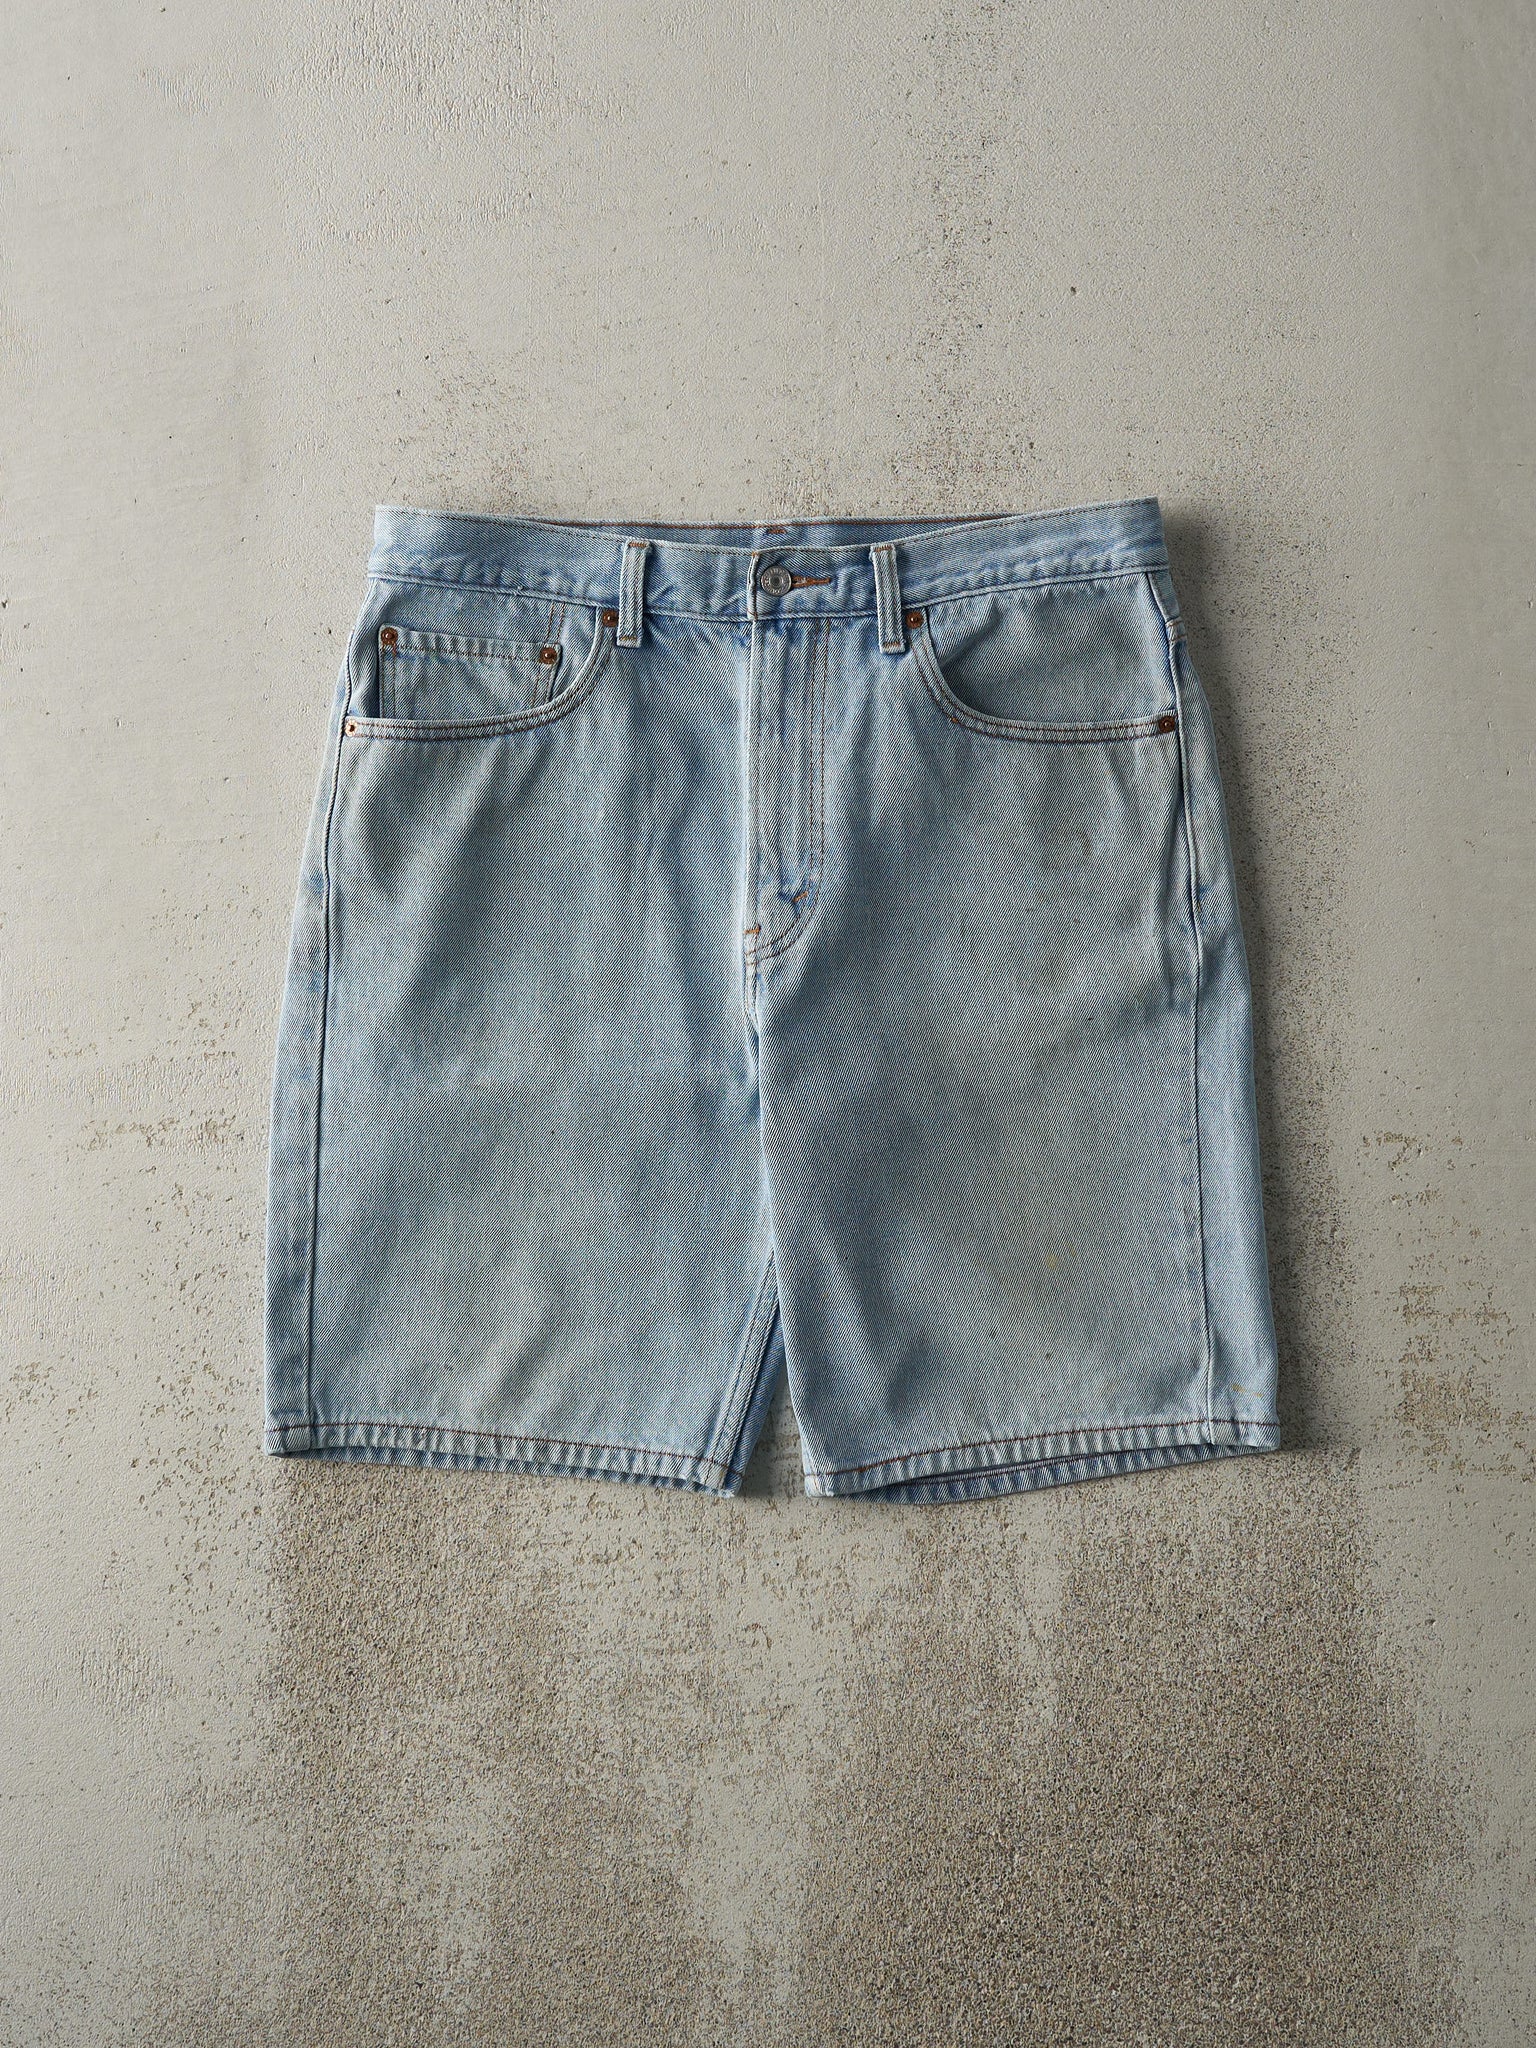 Vintage 90s Light Wash Levi's 505 Jean Shorts (34x9)